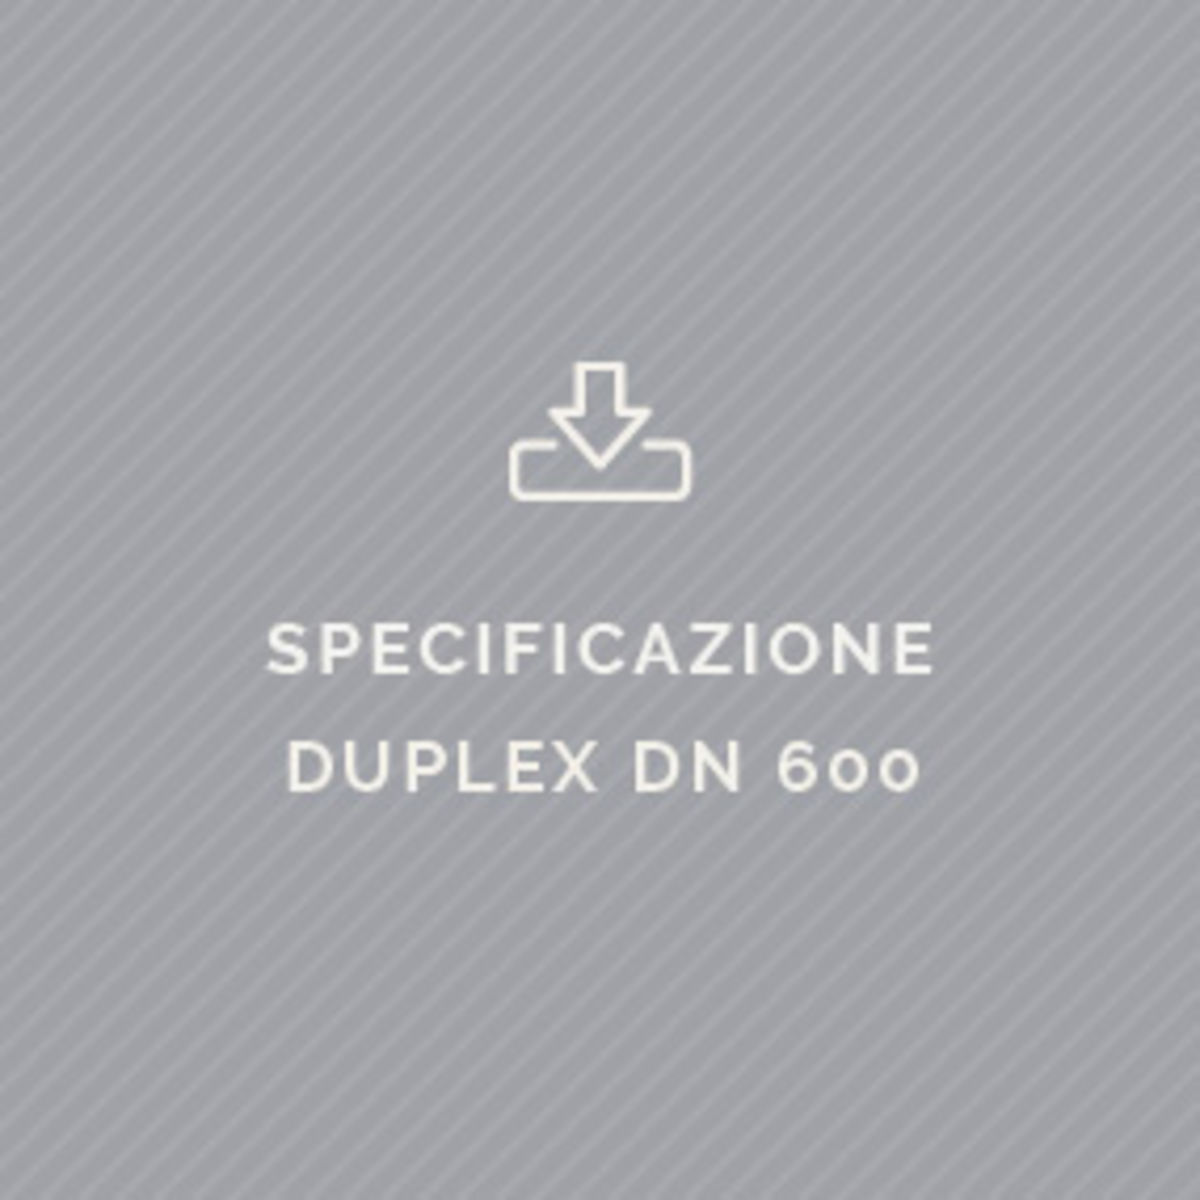 Specificazione Duplex DN 600